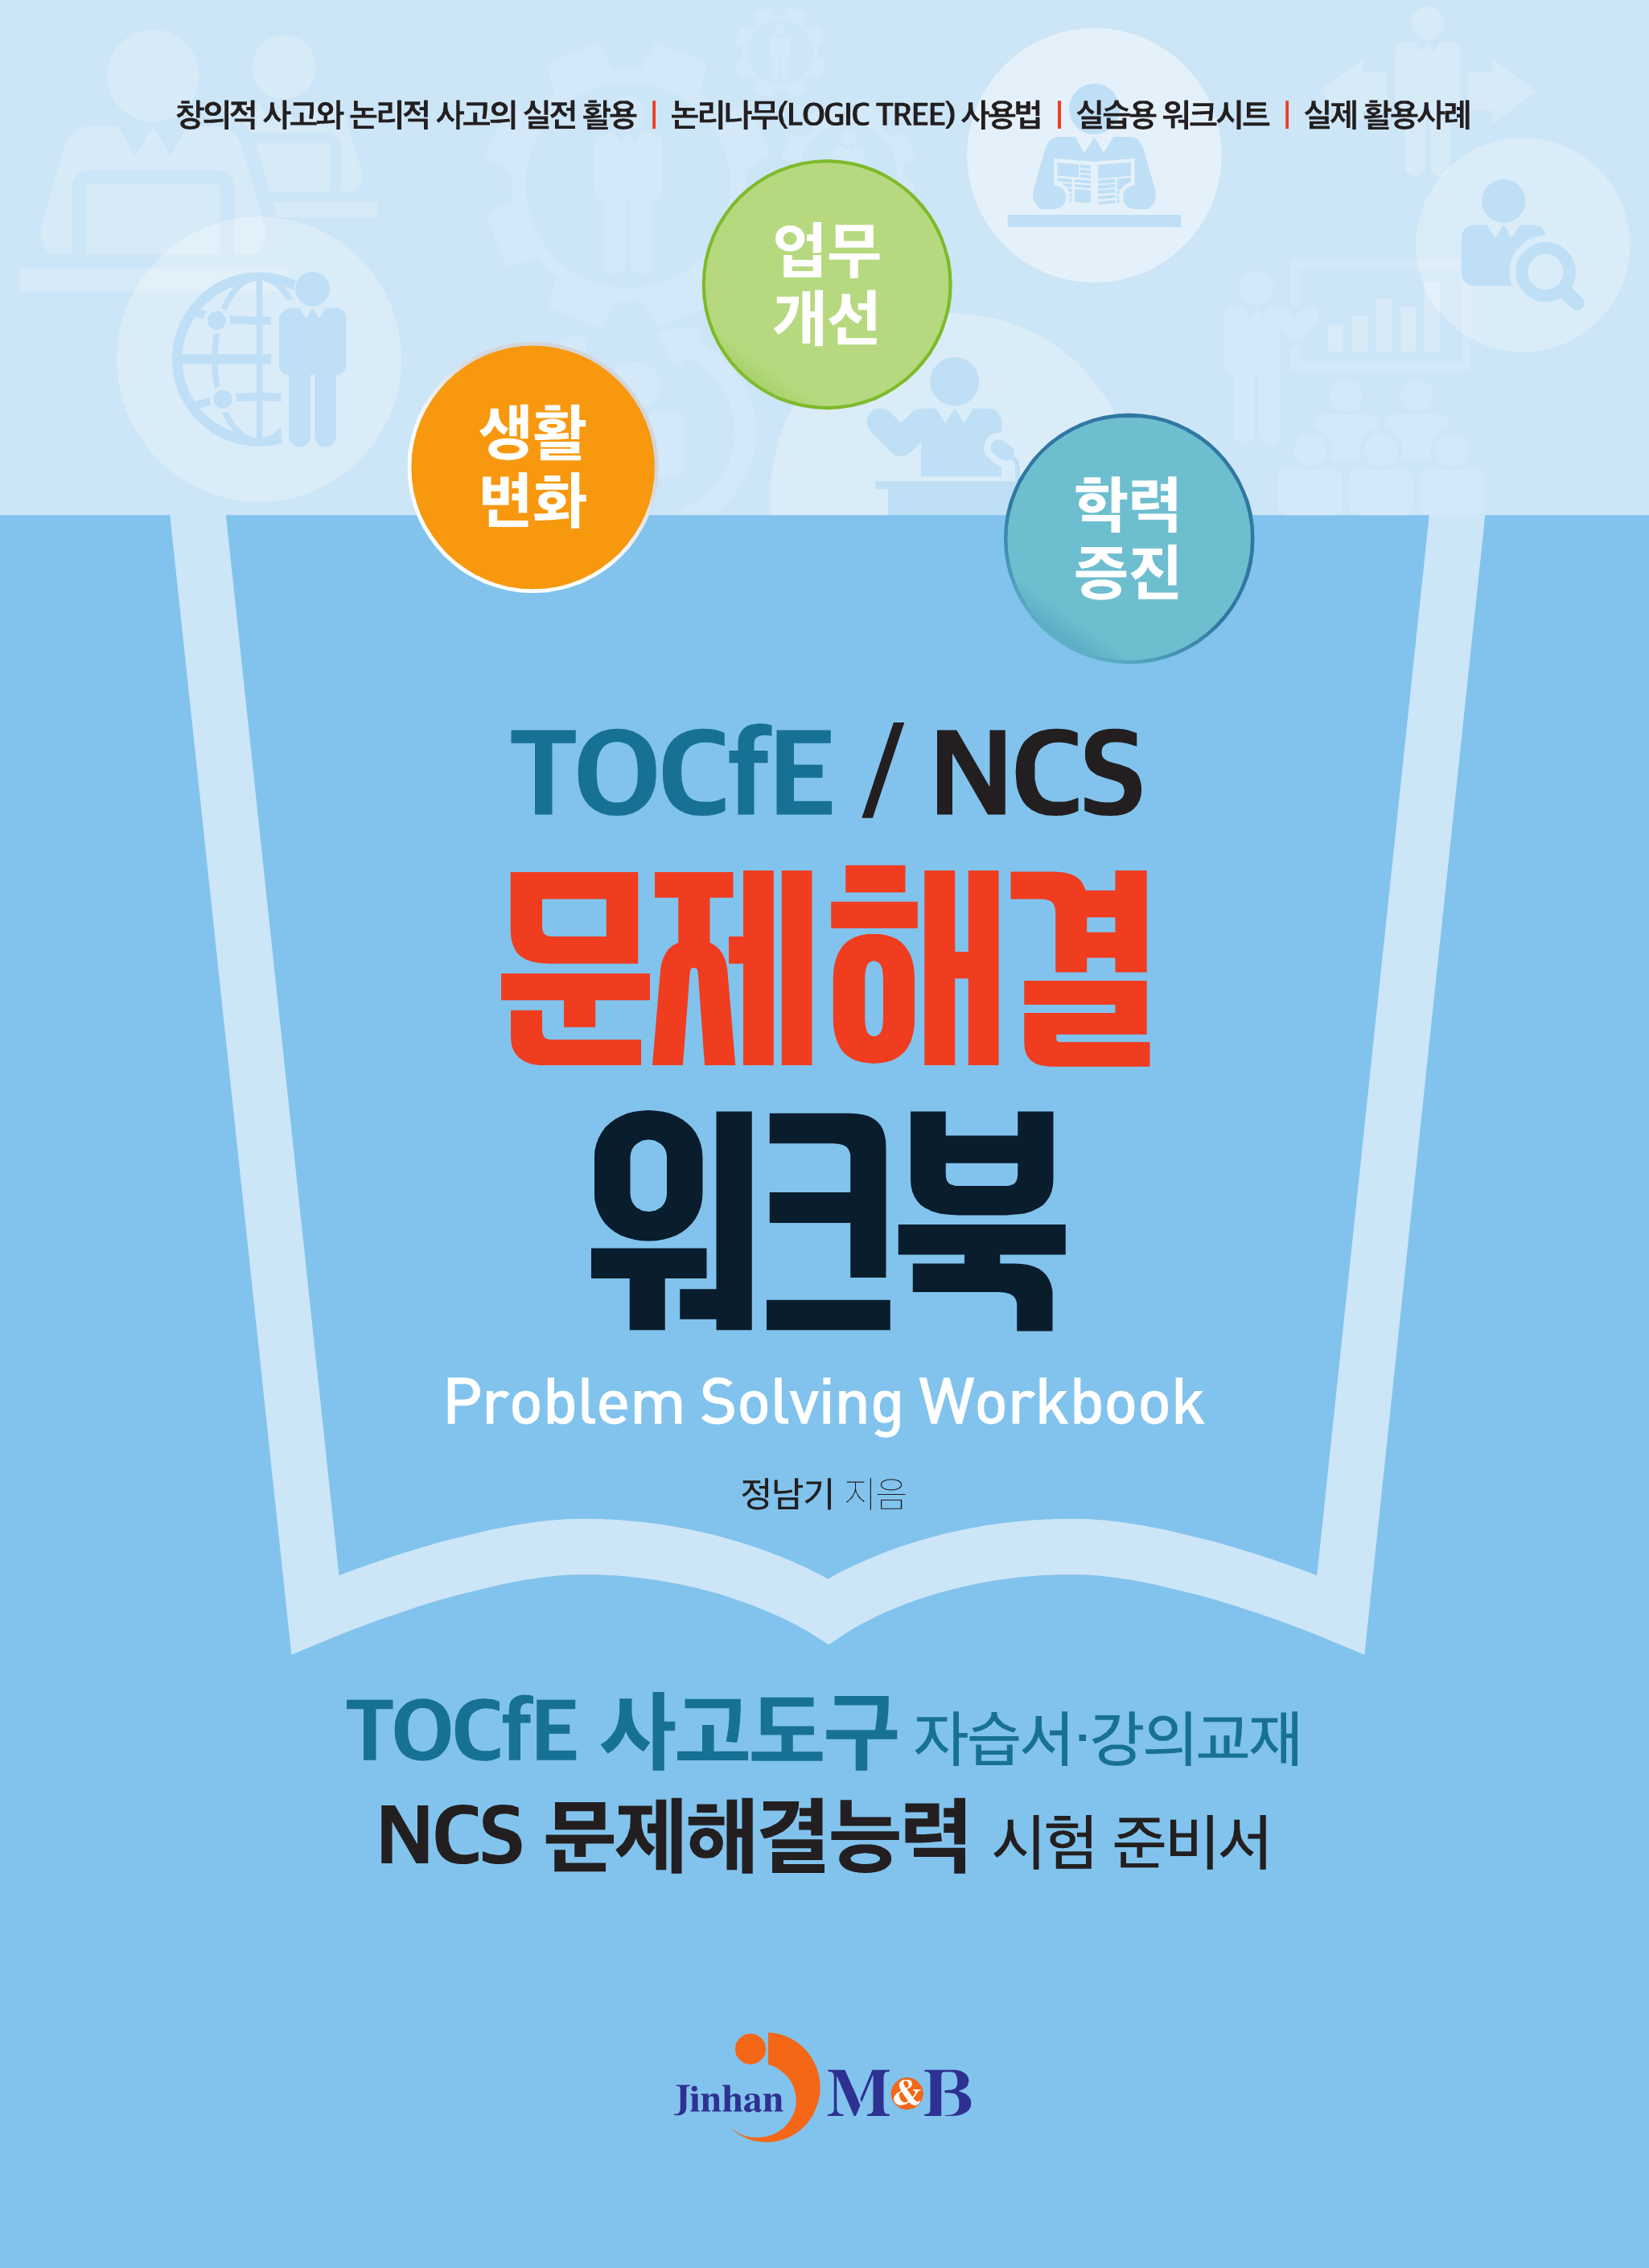 TOCfE/NCS 문제해결 워크북